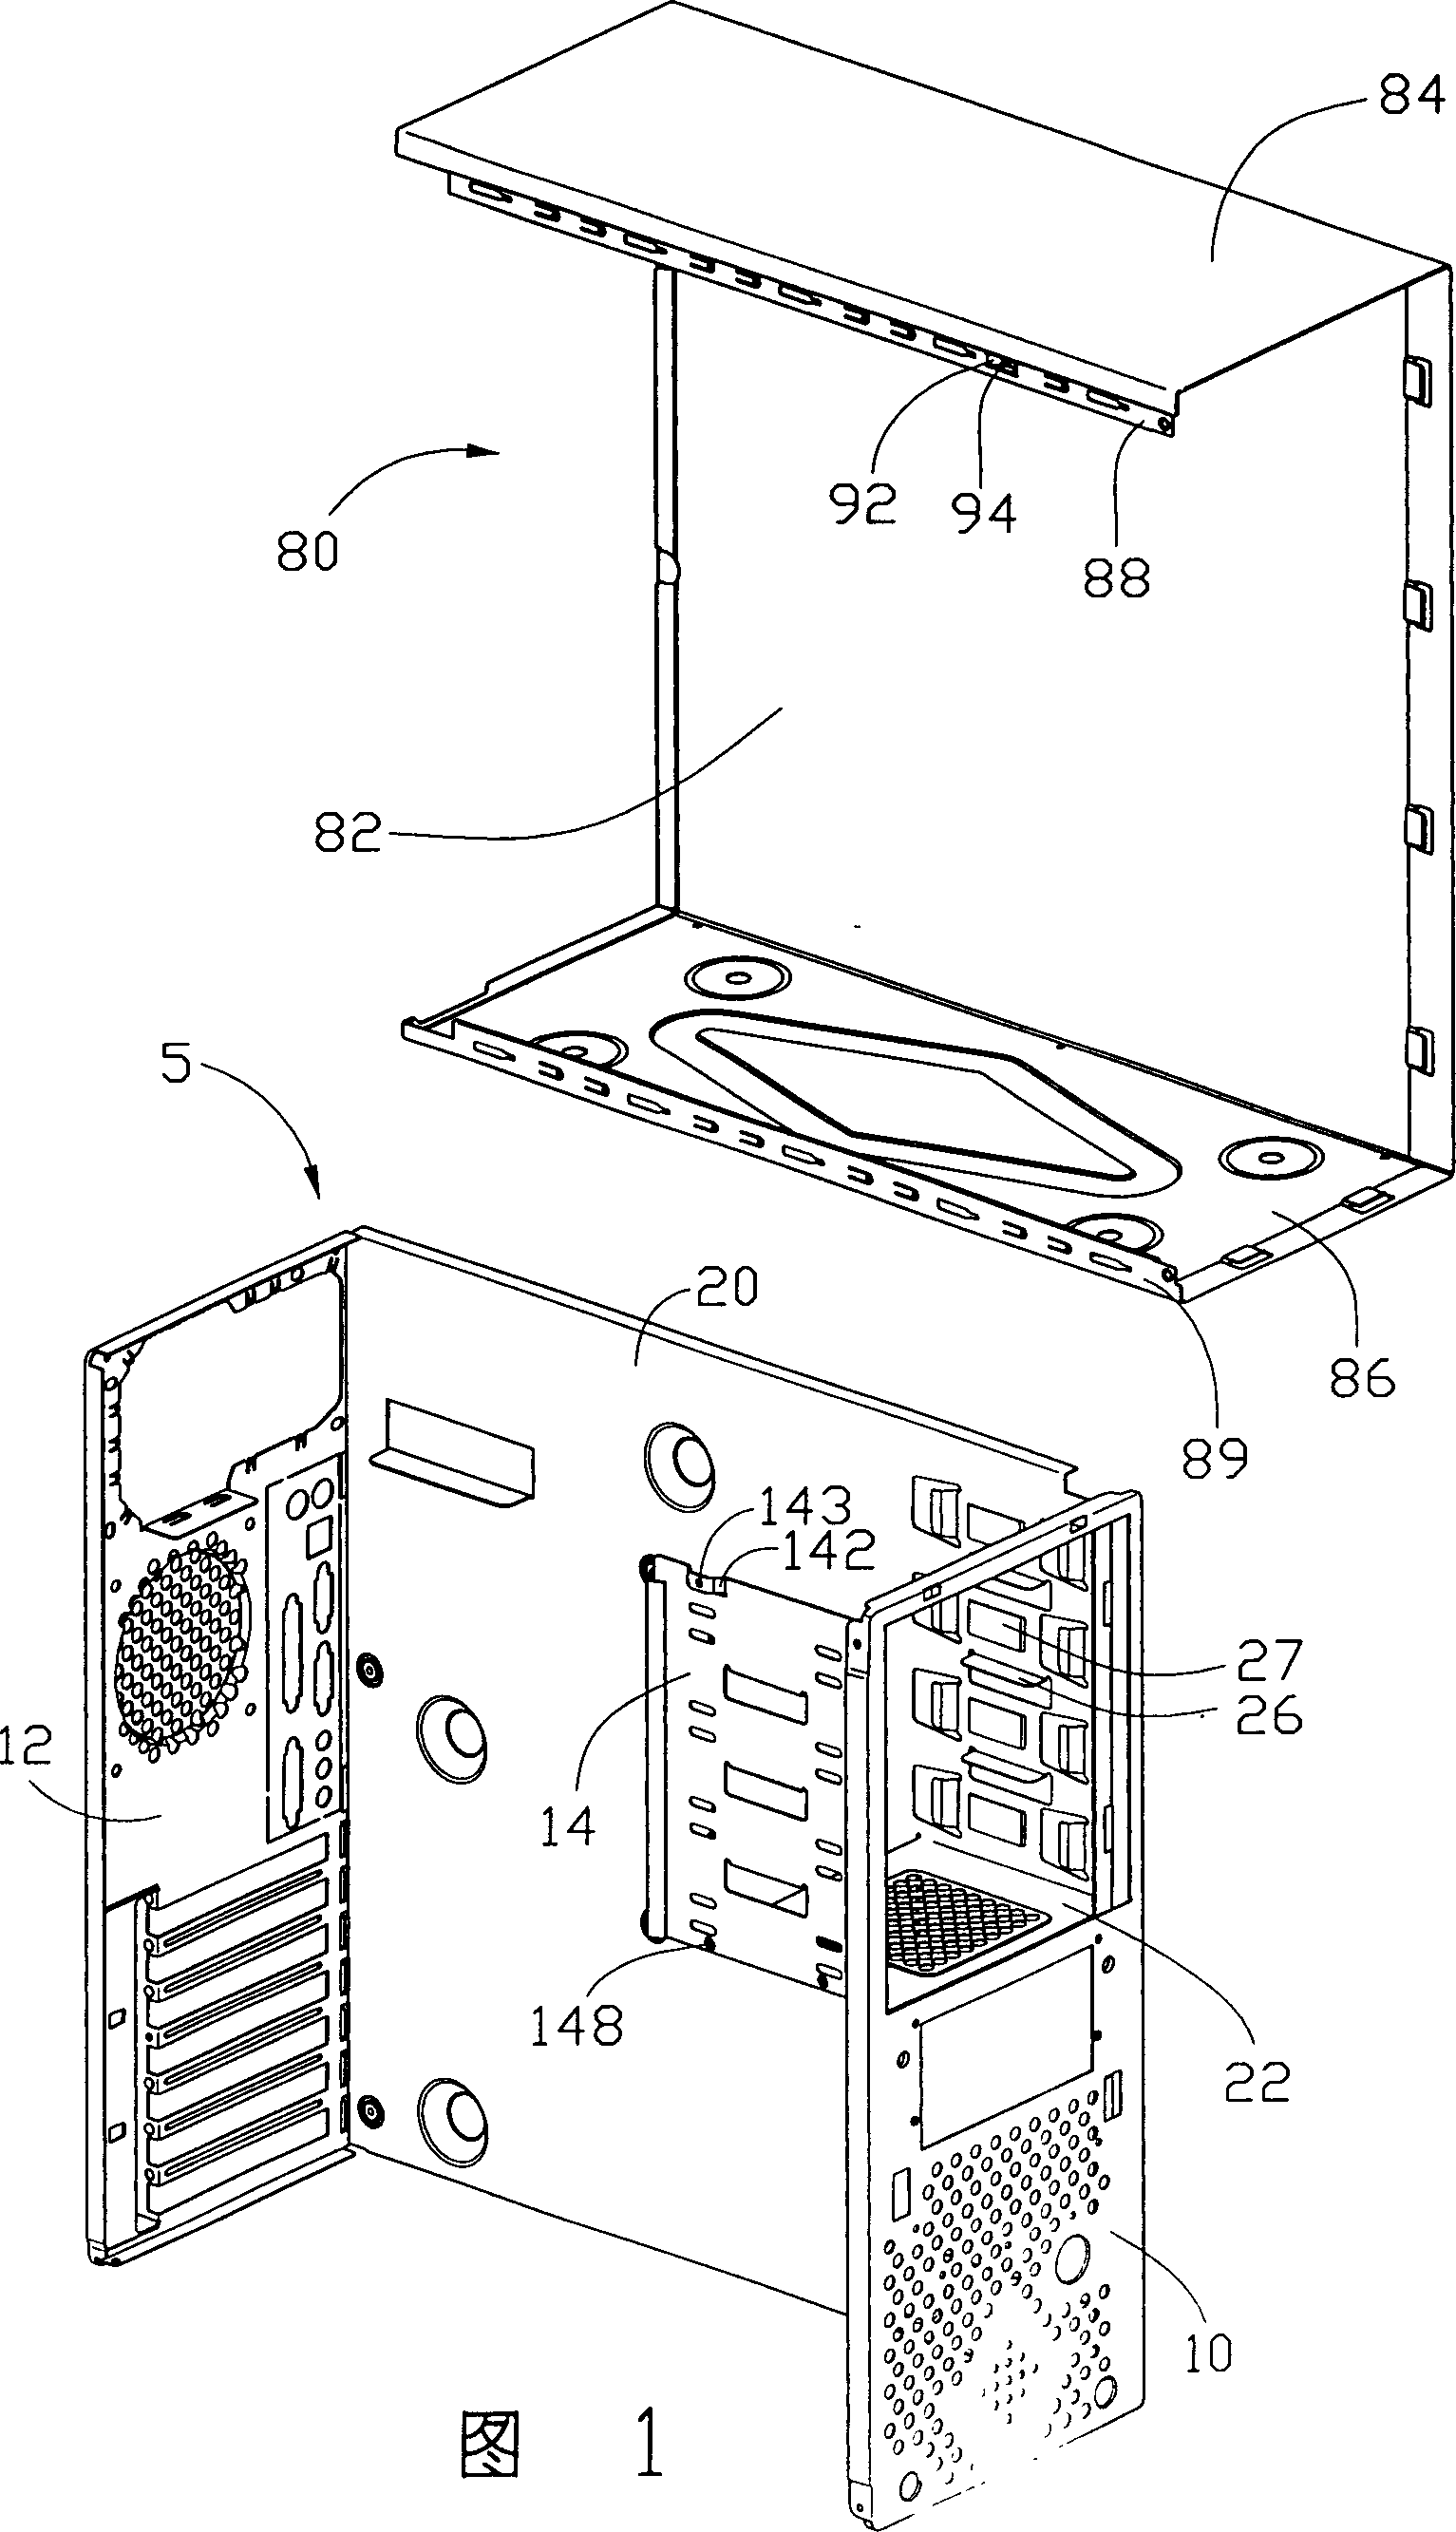 Computer casing